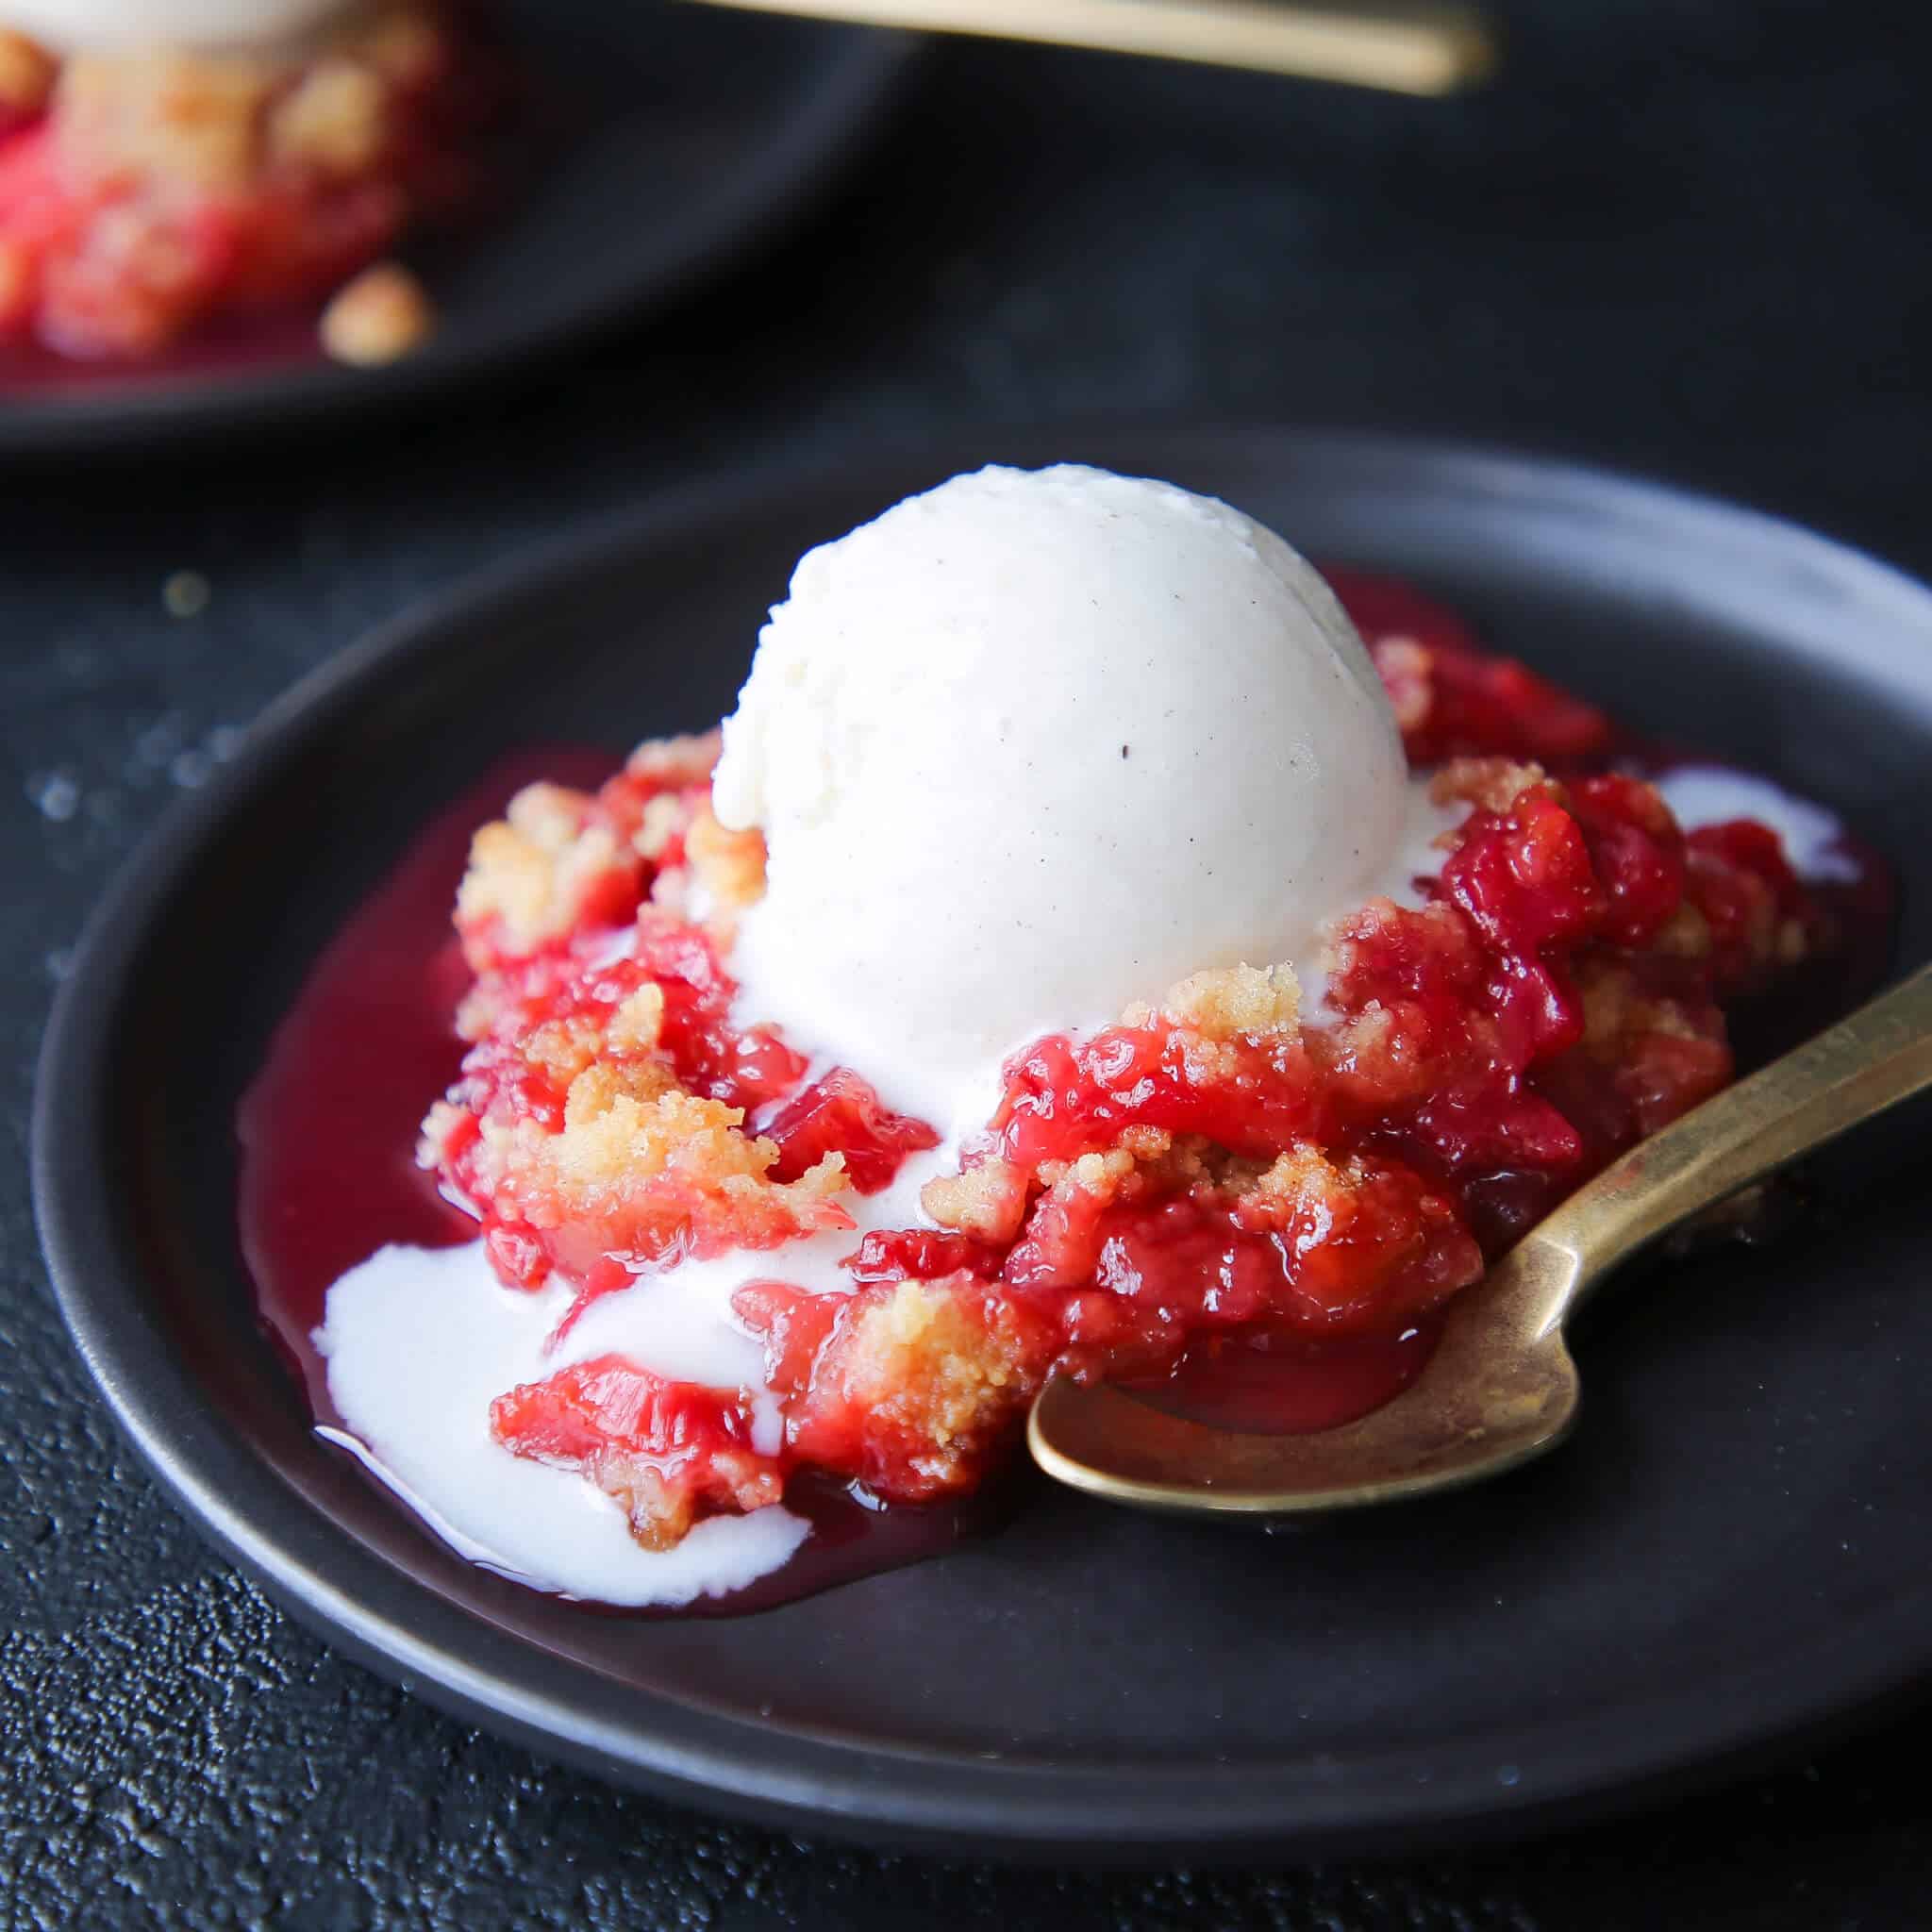 Grandmas Raspberry Rhubarb Crumble on plate with ice cream side view